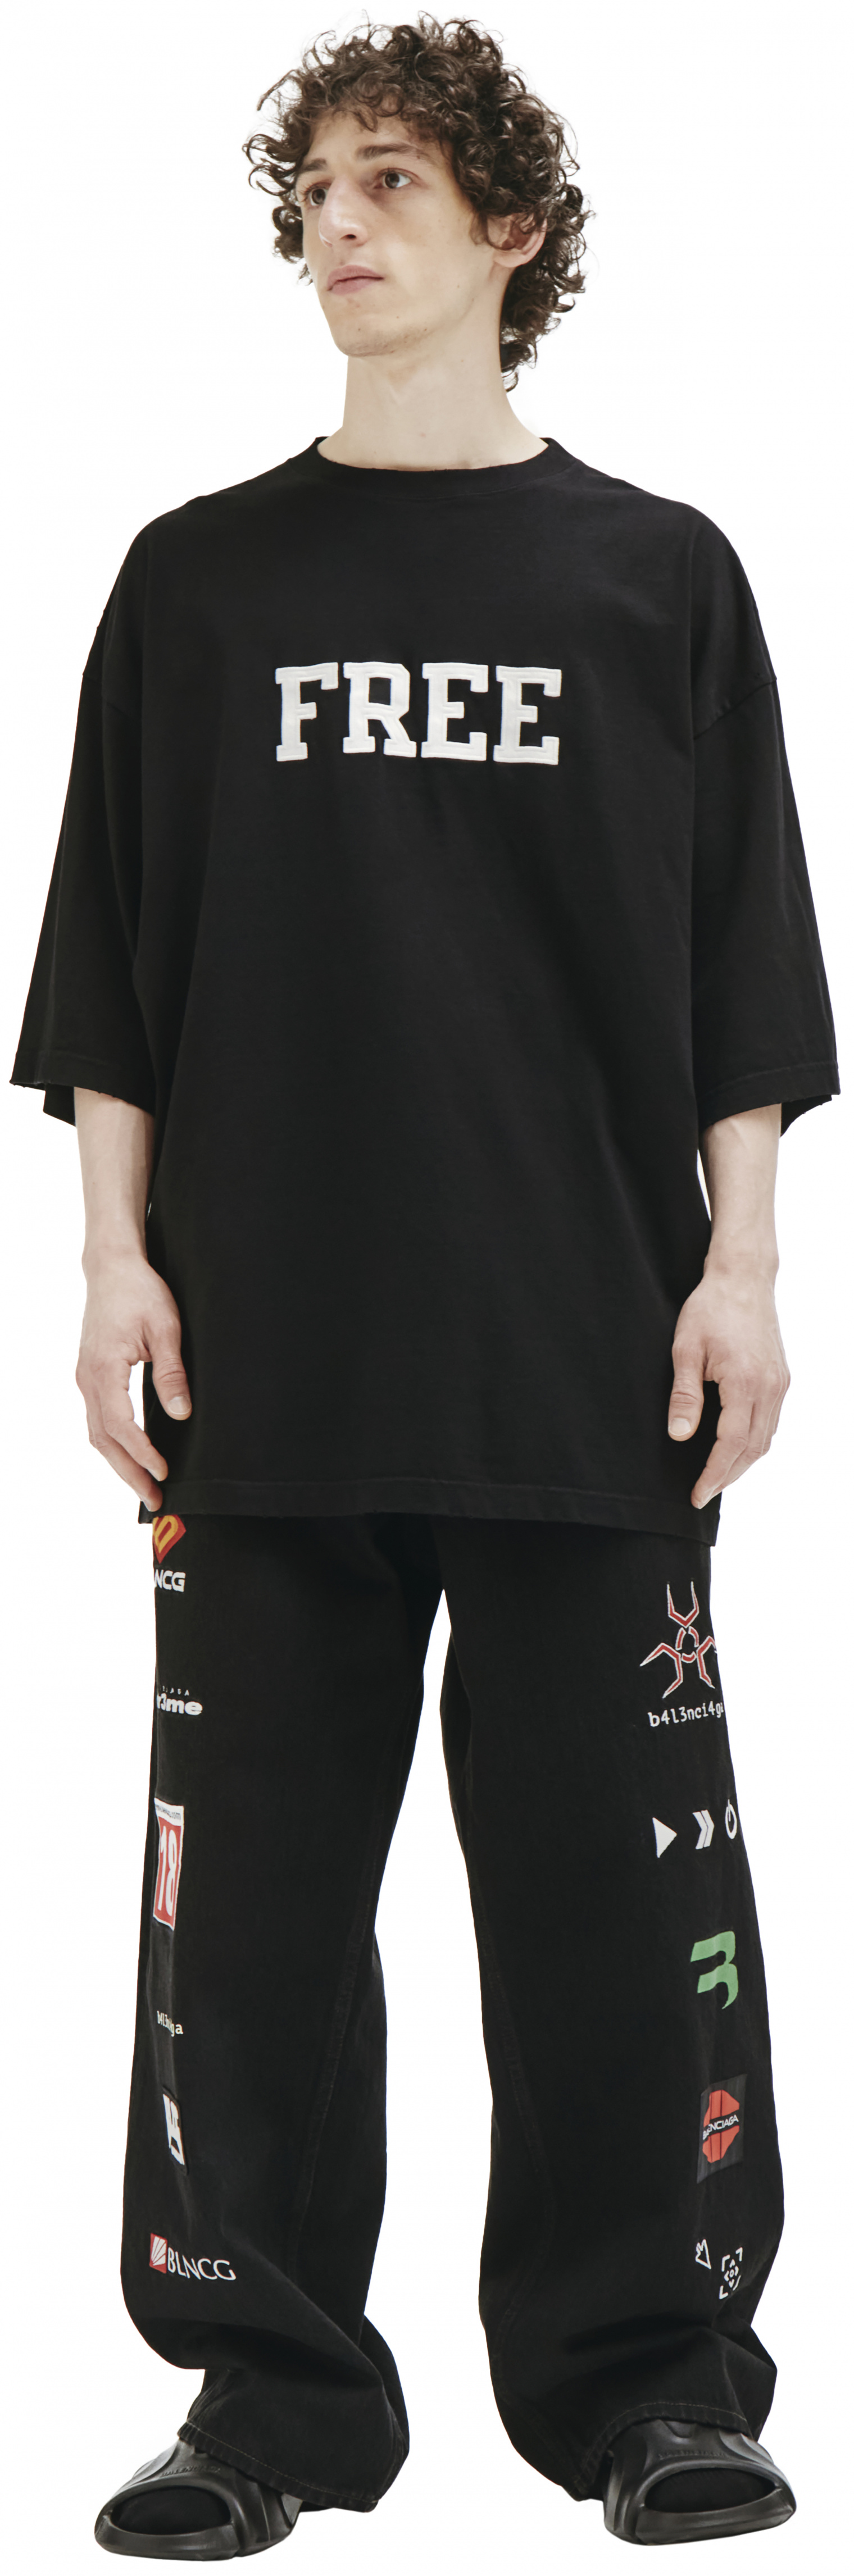 Balenciaga Черная футболка с вышивкой FREE